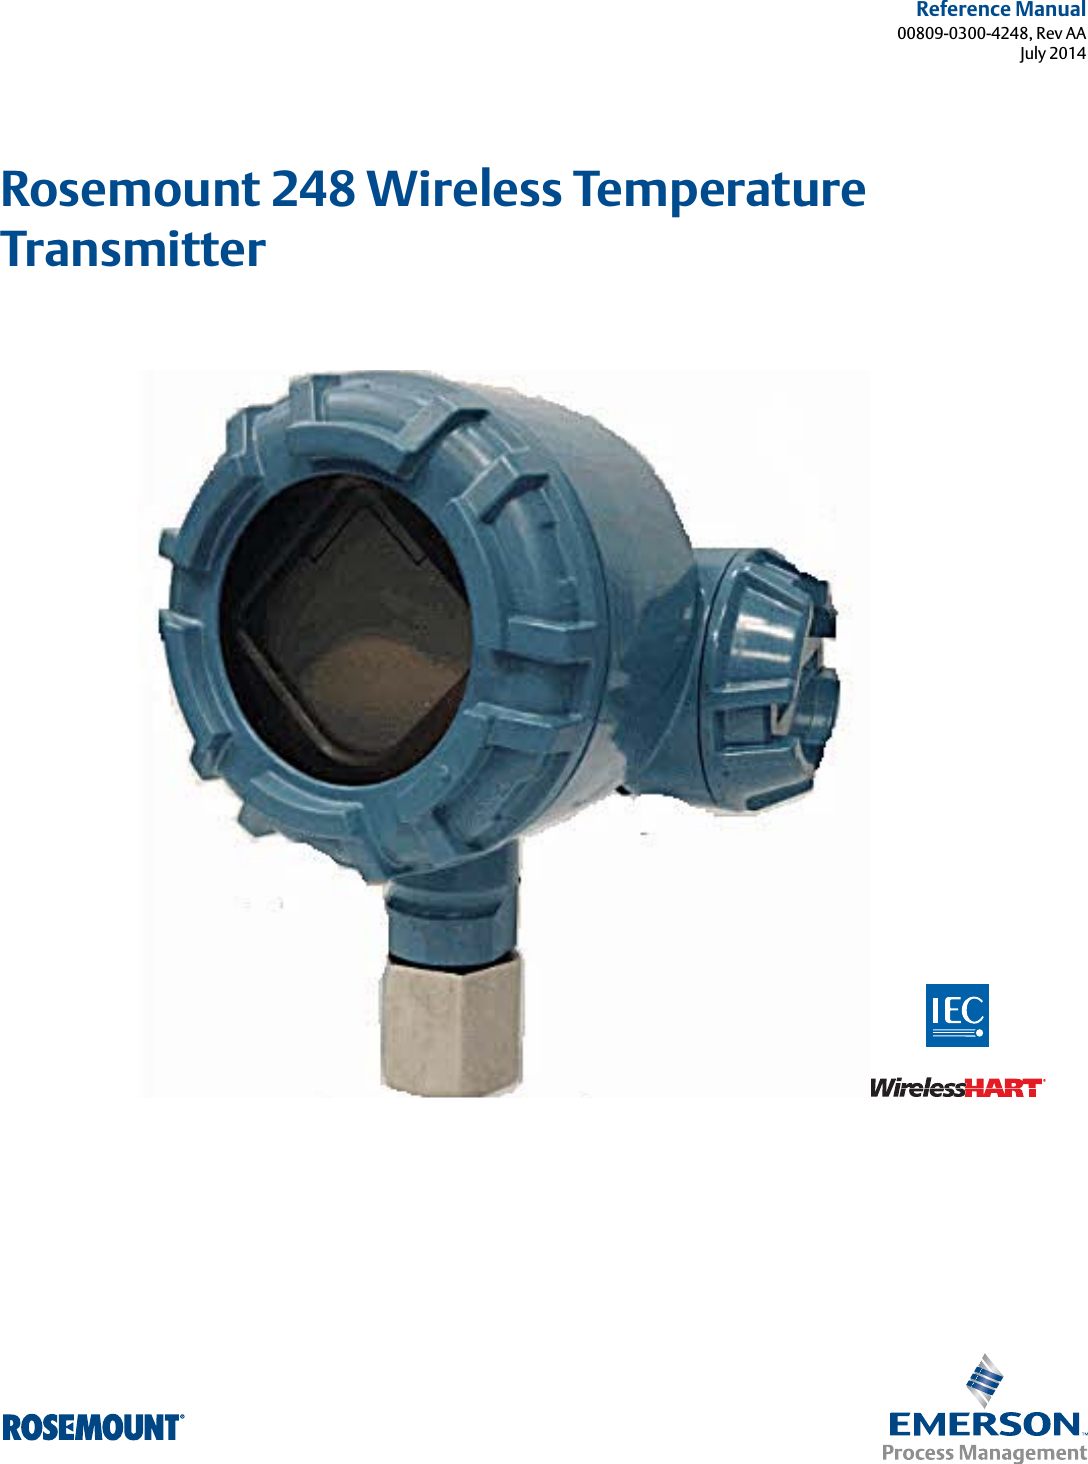 Reference Manual00809-0300-4248, Rev AAJuly 2014Rosemount 248 Wireless Temperature Transmitter